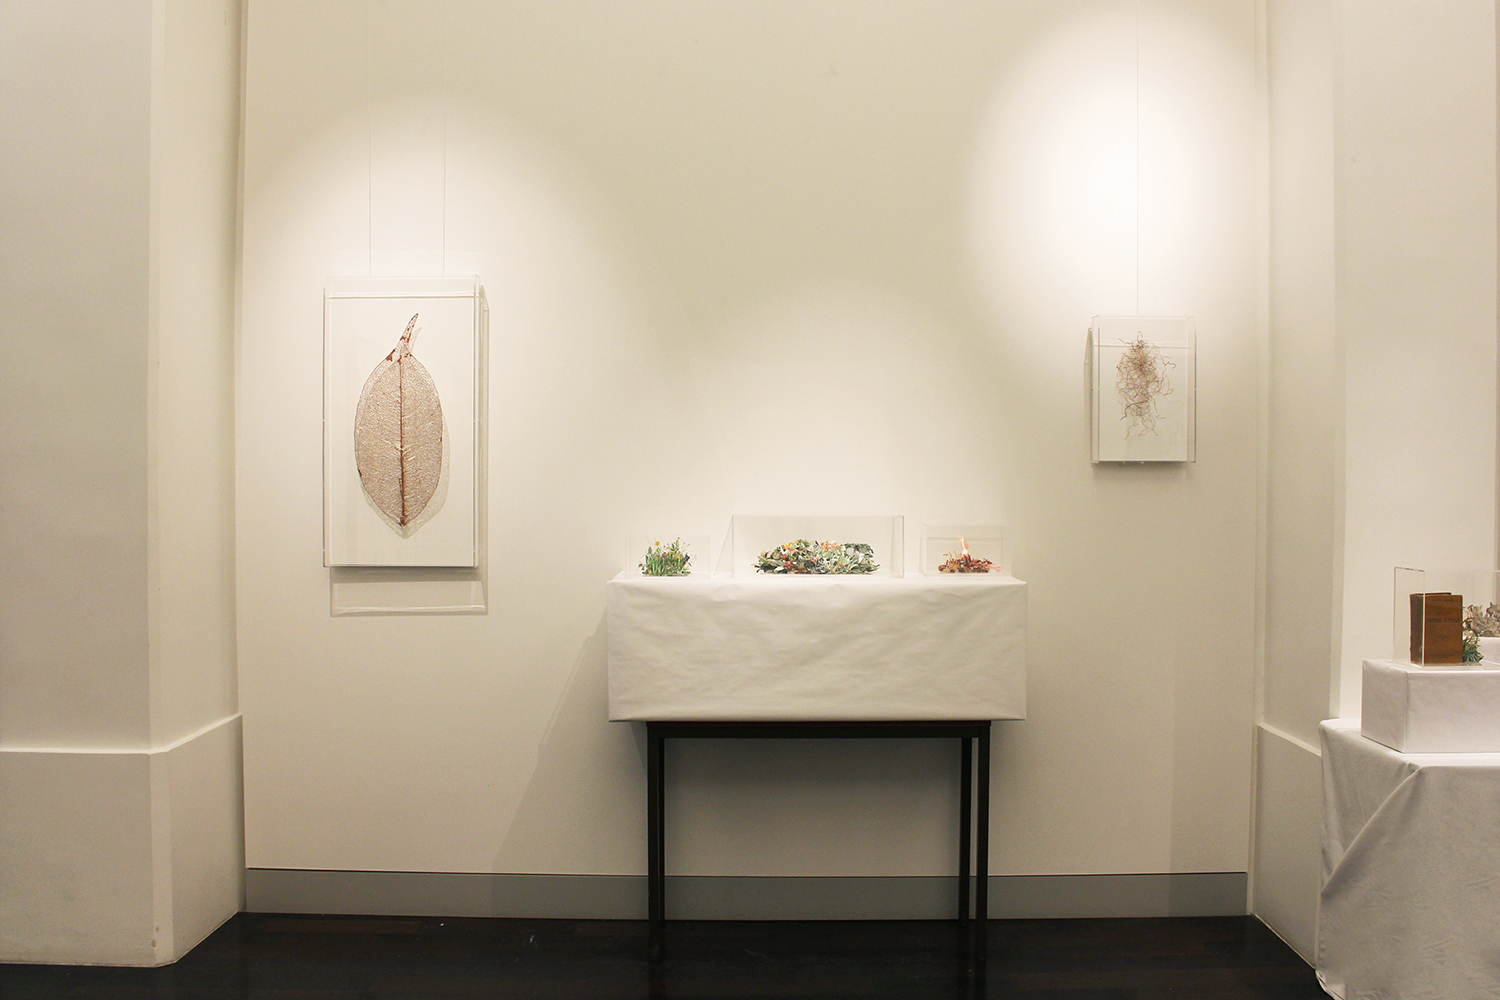 Exhibition view, "Works", Rodrigo Arteaga, Alexandra Hopf, Alessandro Roma Hôtel de l'Industrie, February 18th - February 20th, 2016